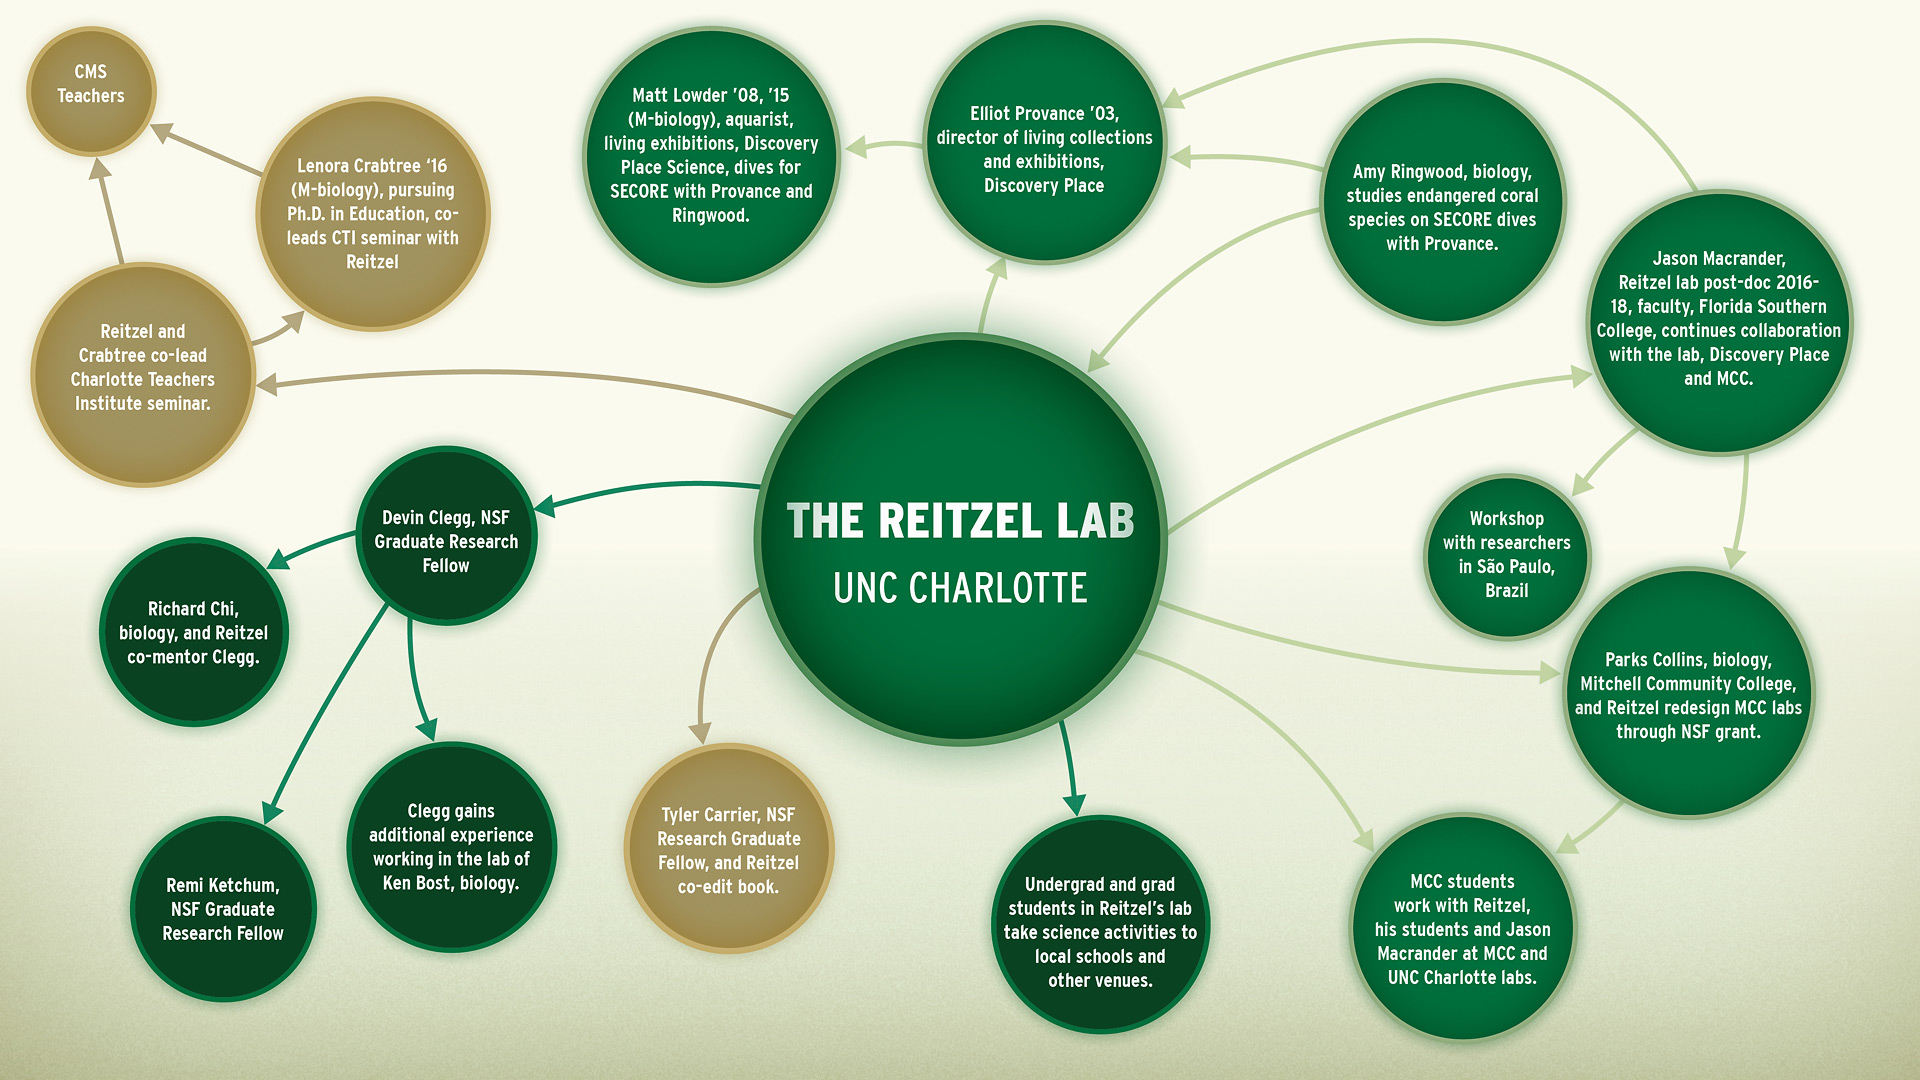 Reitzel lab connections